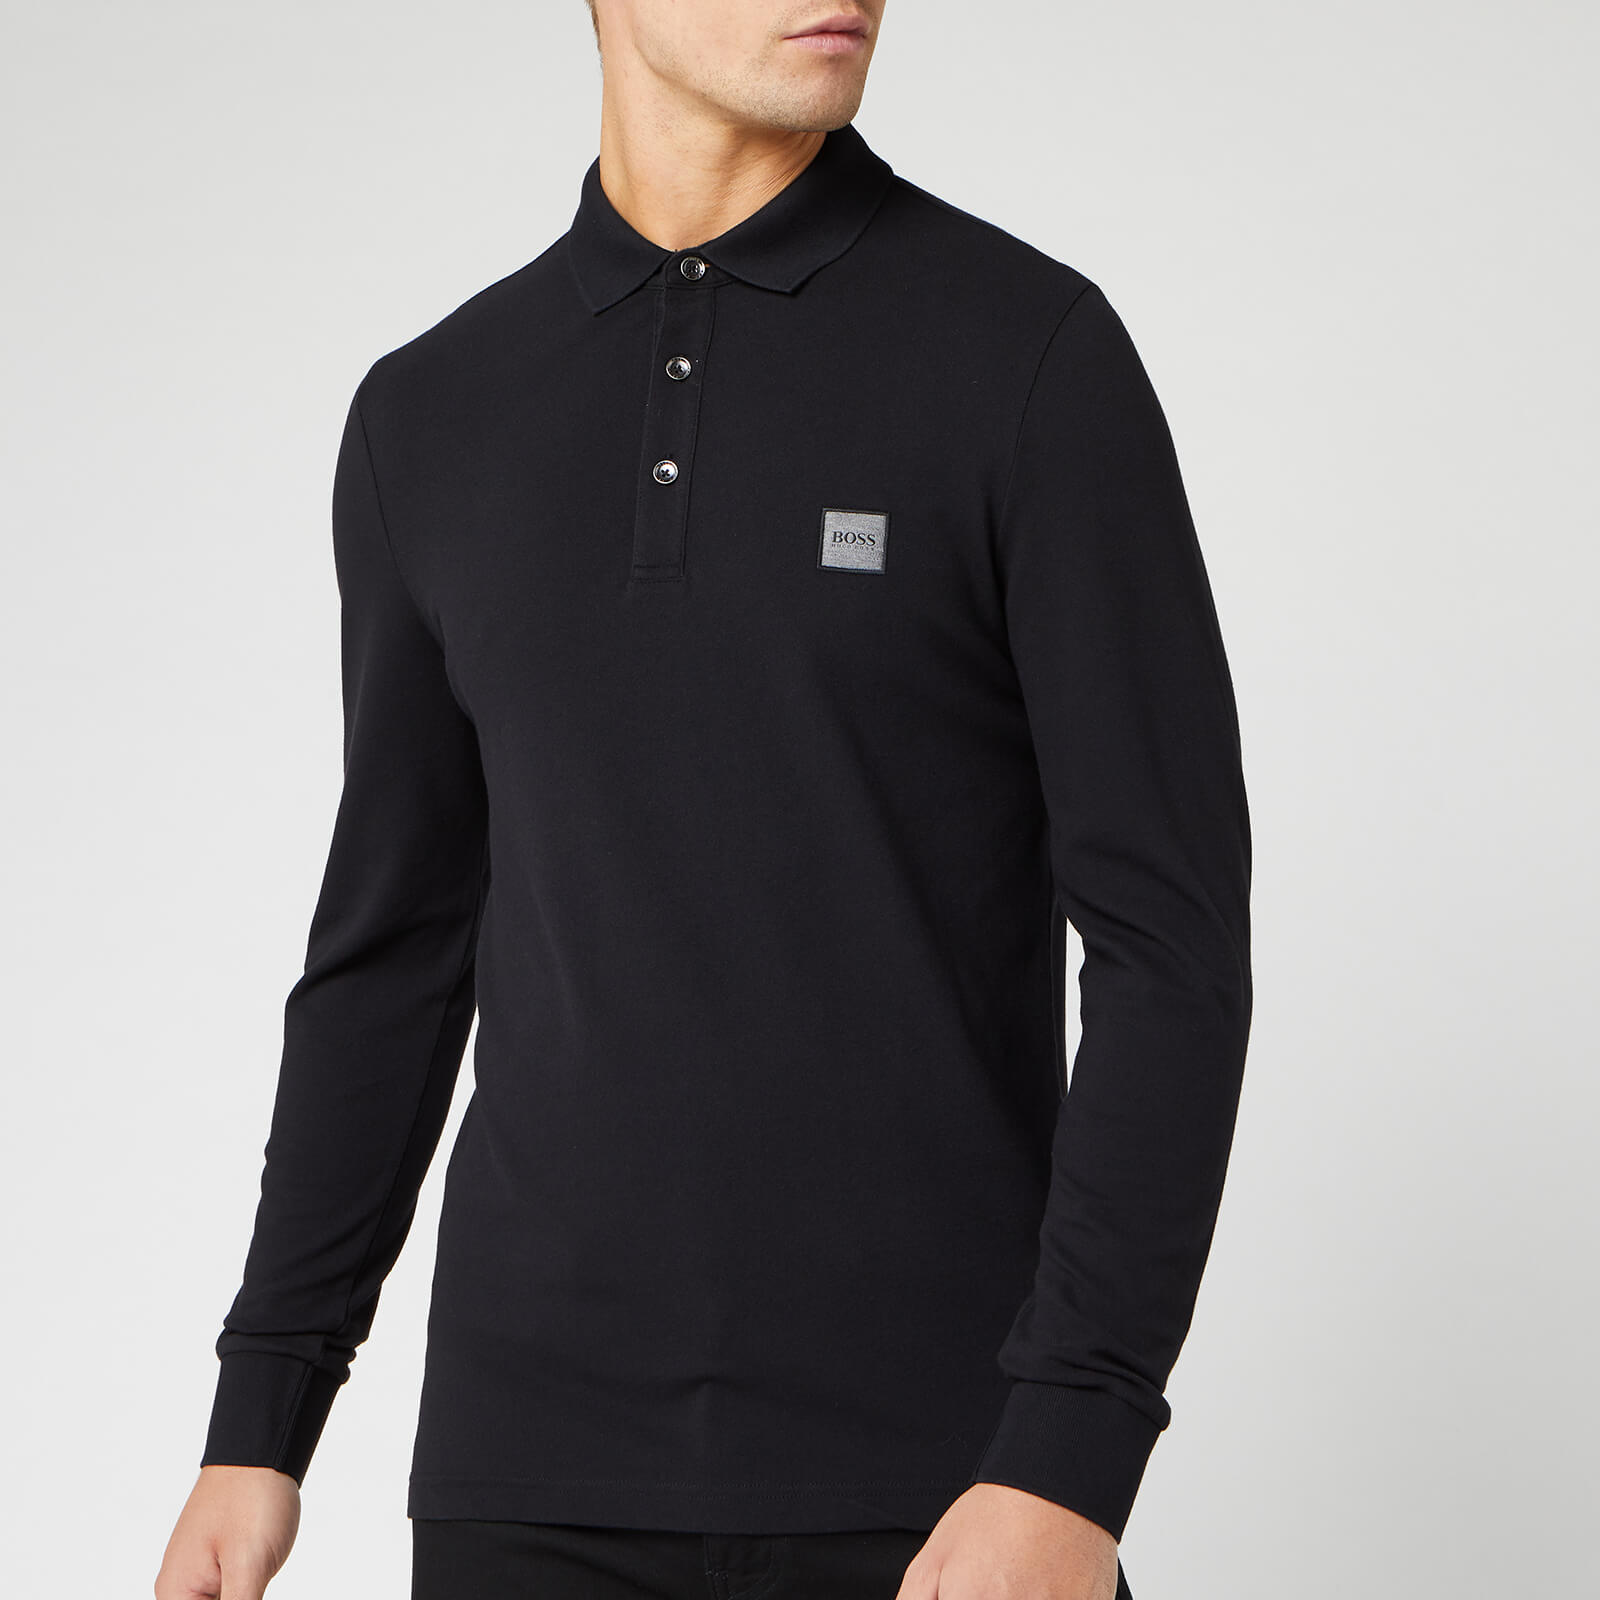 BOSS Men's Passerby Long Sleeve Polo Shirt - Black - M - Black